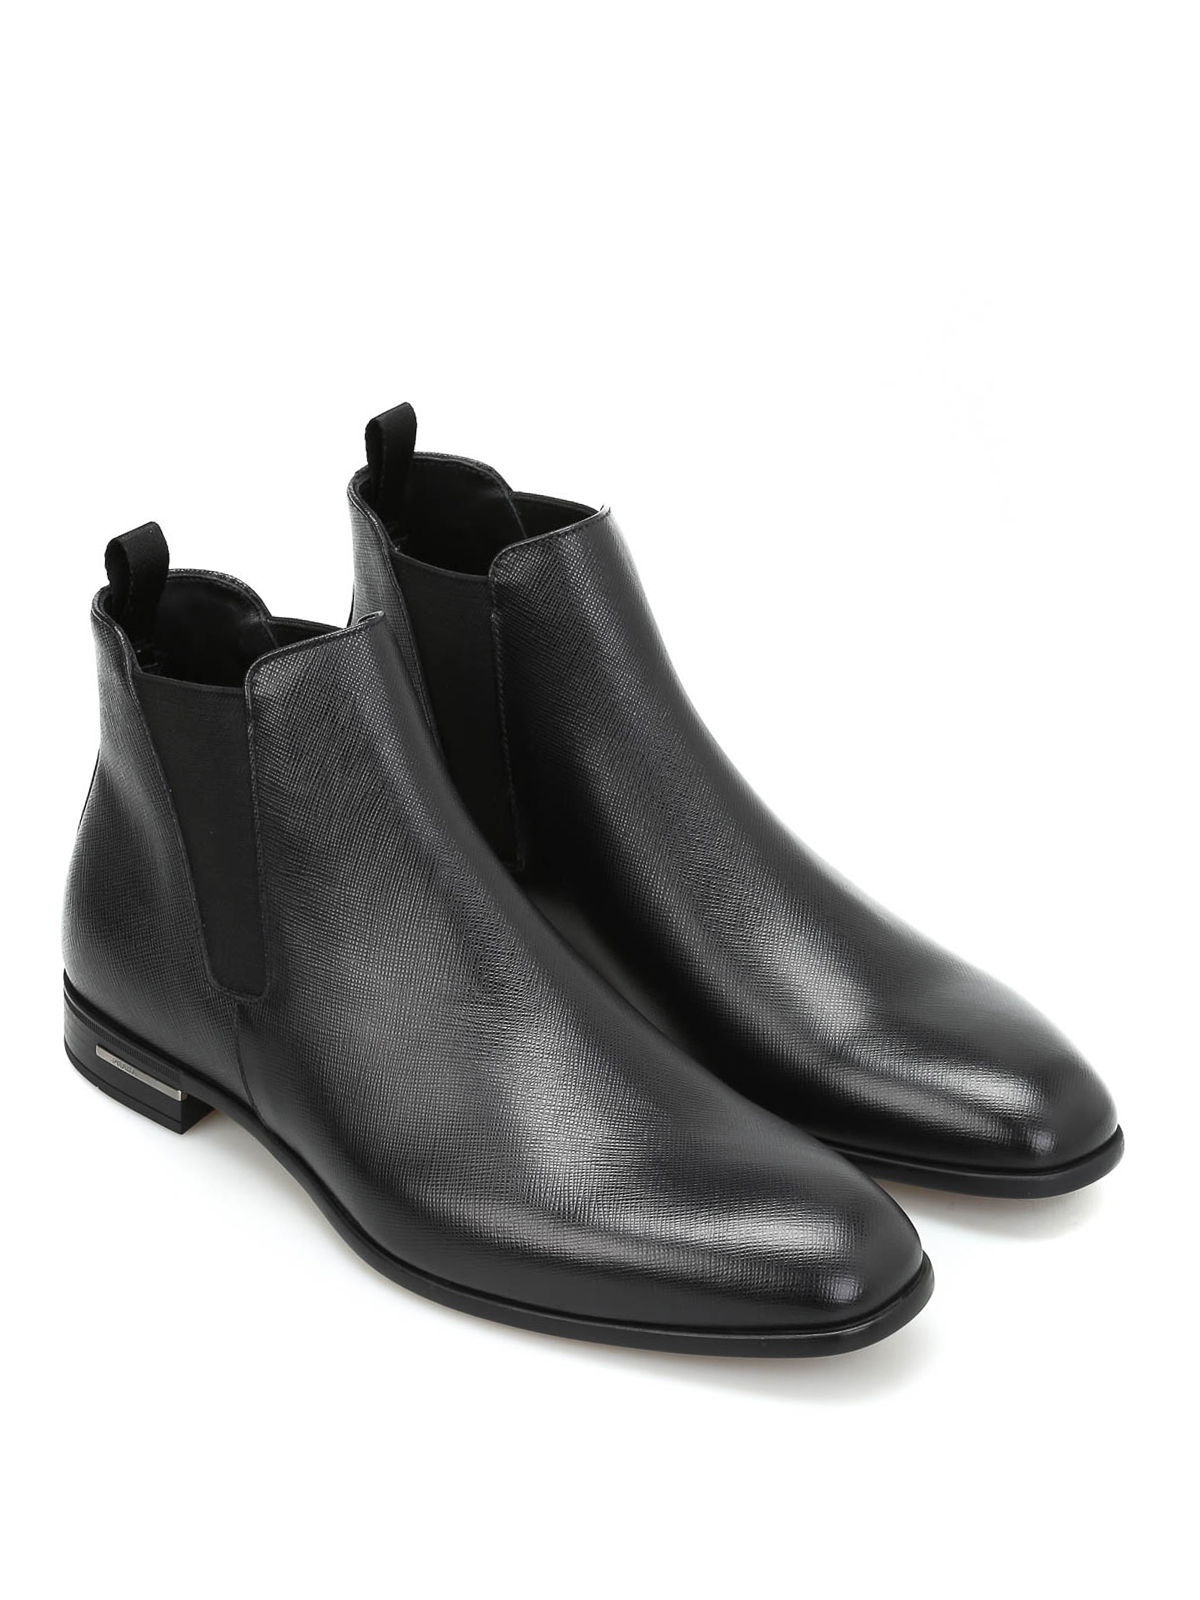 Prada - Saffiano leather ankle boots 